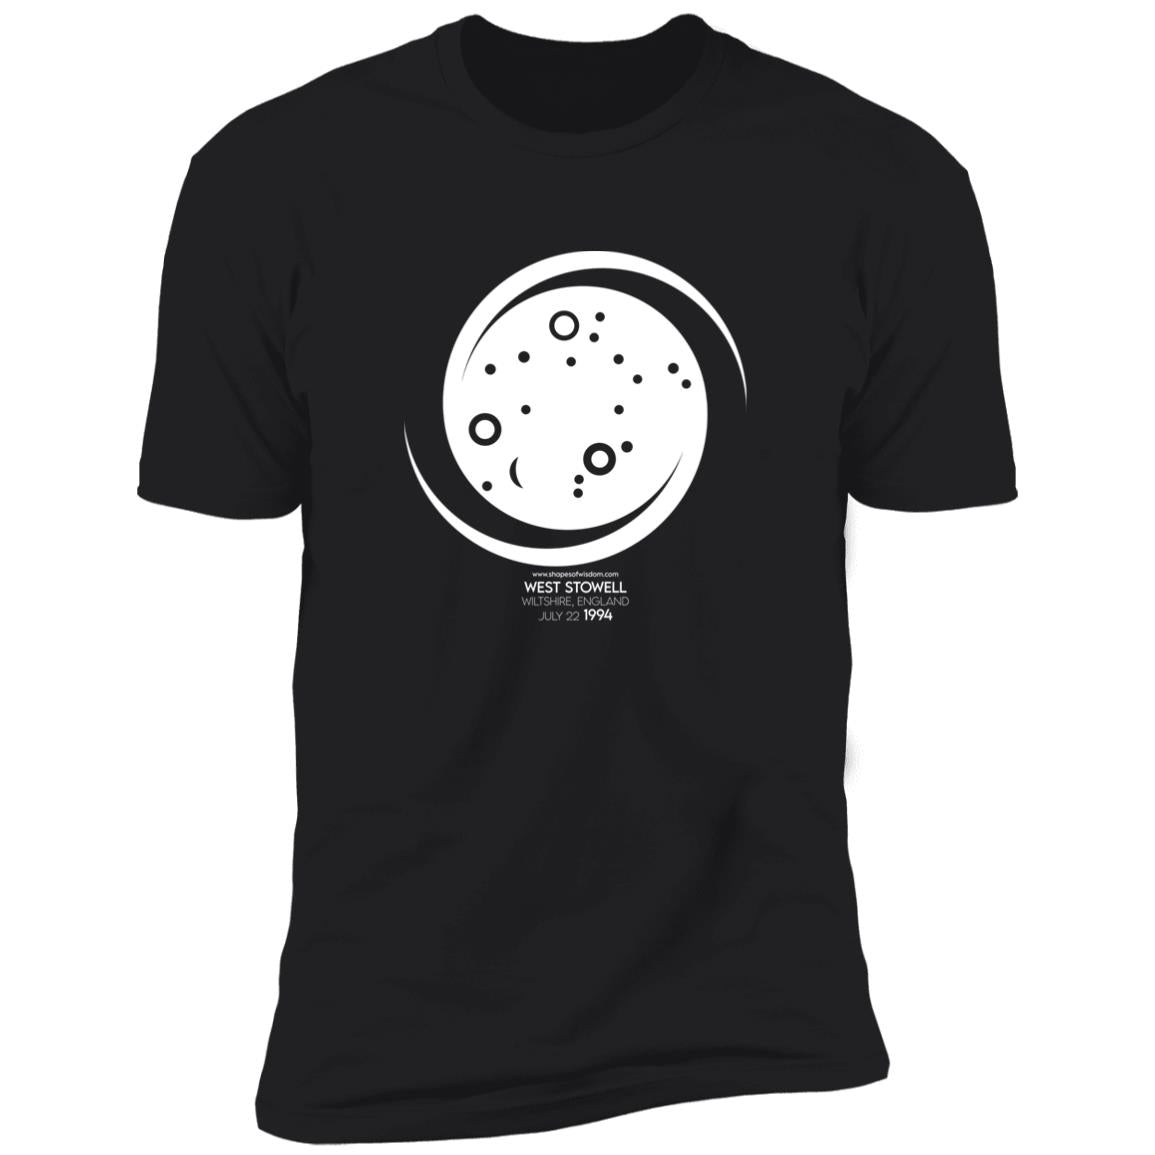 Crop Circle Premium T-Shirt - West Stowell 2